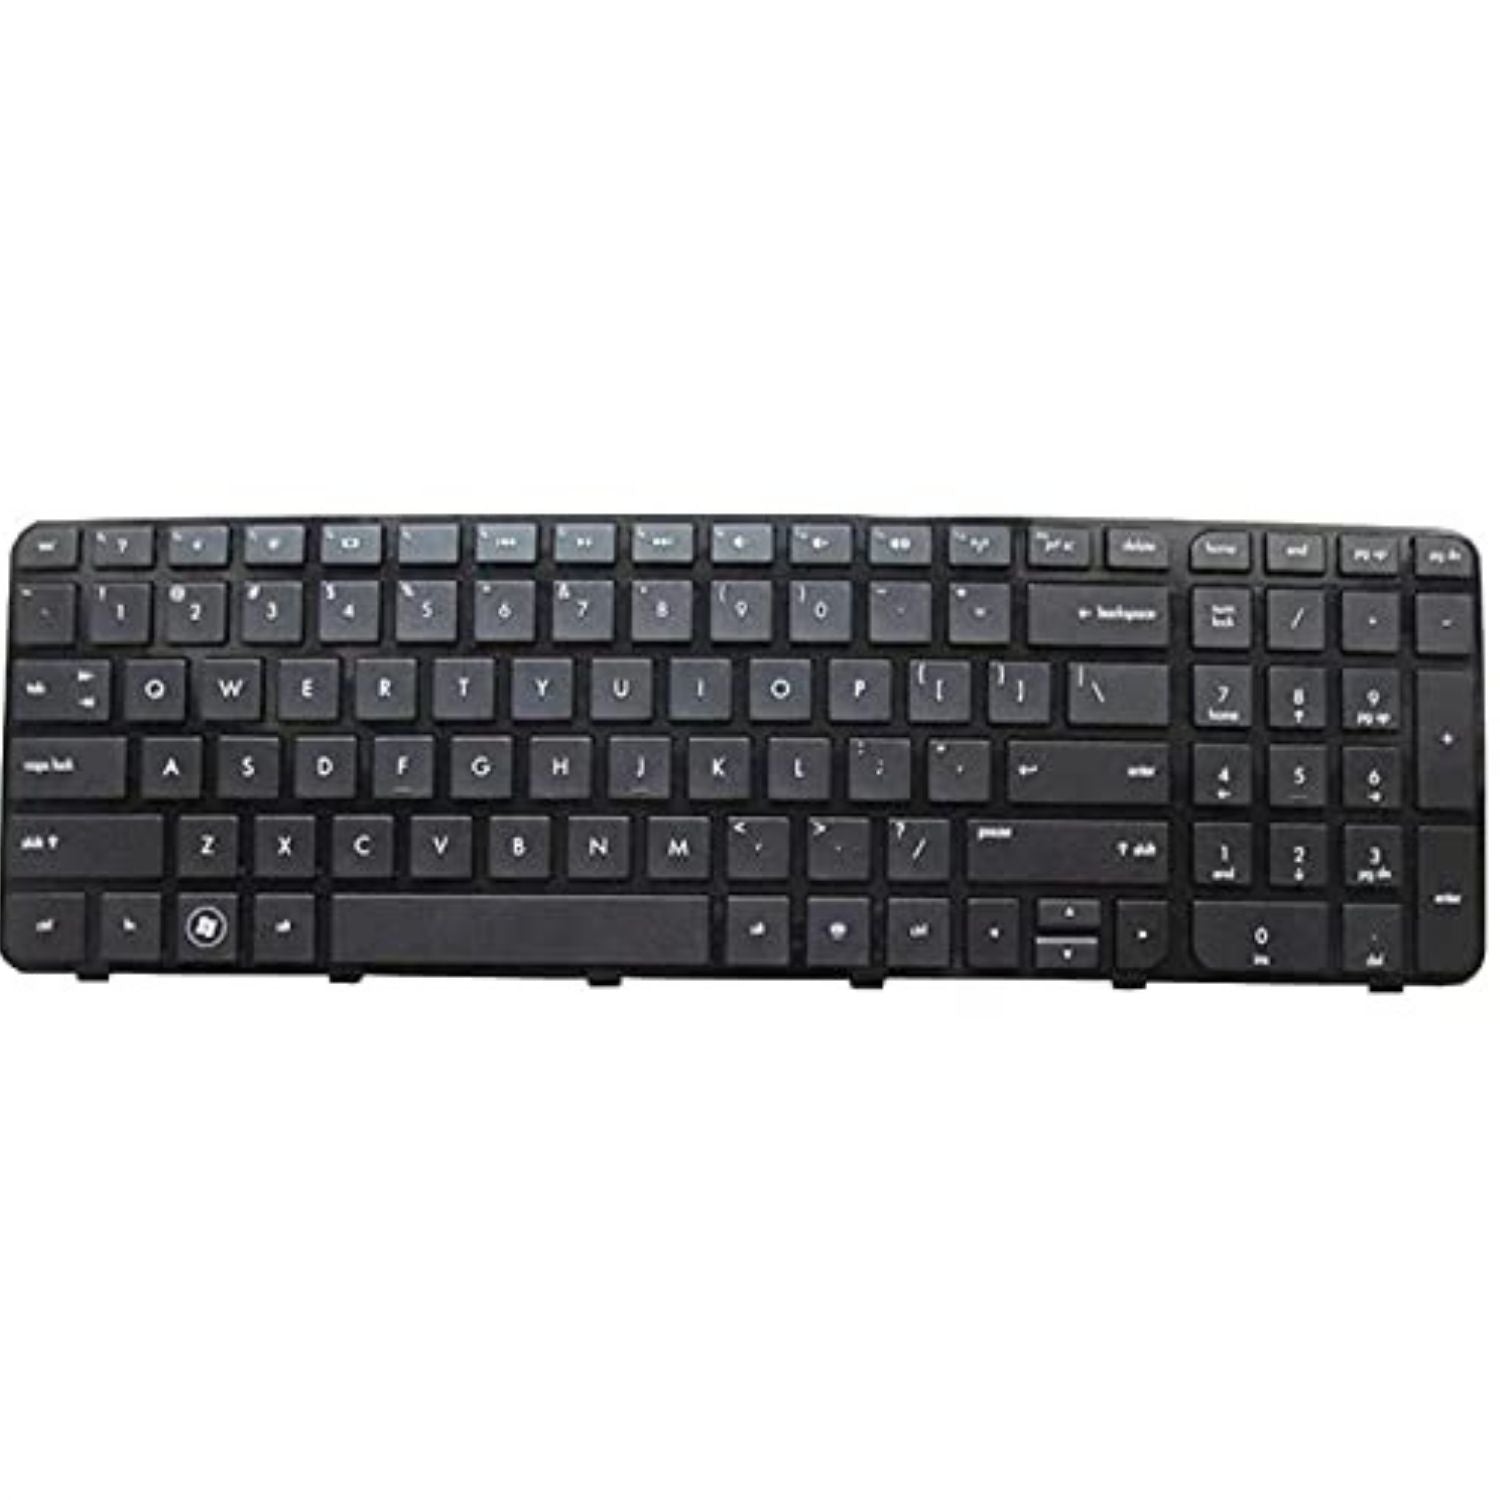 HP Laptop keyboard Pavilion G6-2000 G6-2100 G6-2200 G6-2300 G6T-2000 Series 699497-001 697452-001 700271-001 AER36U02310 (Black) with